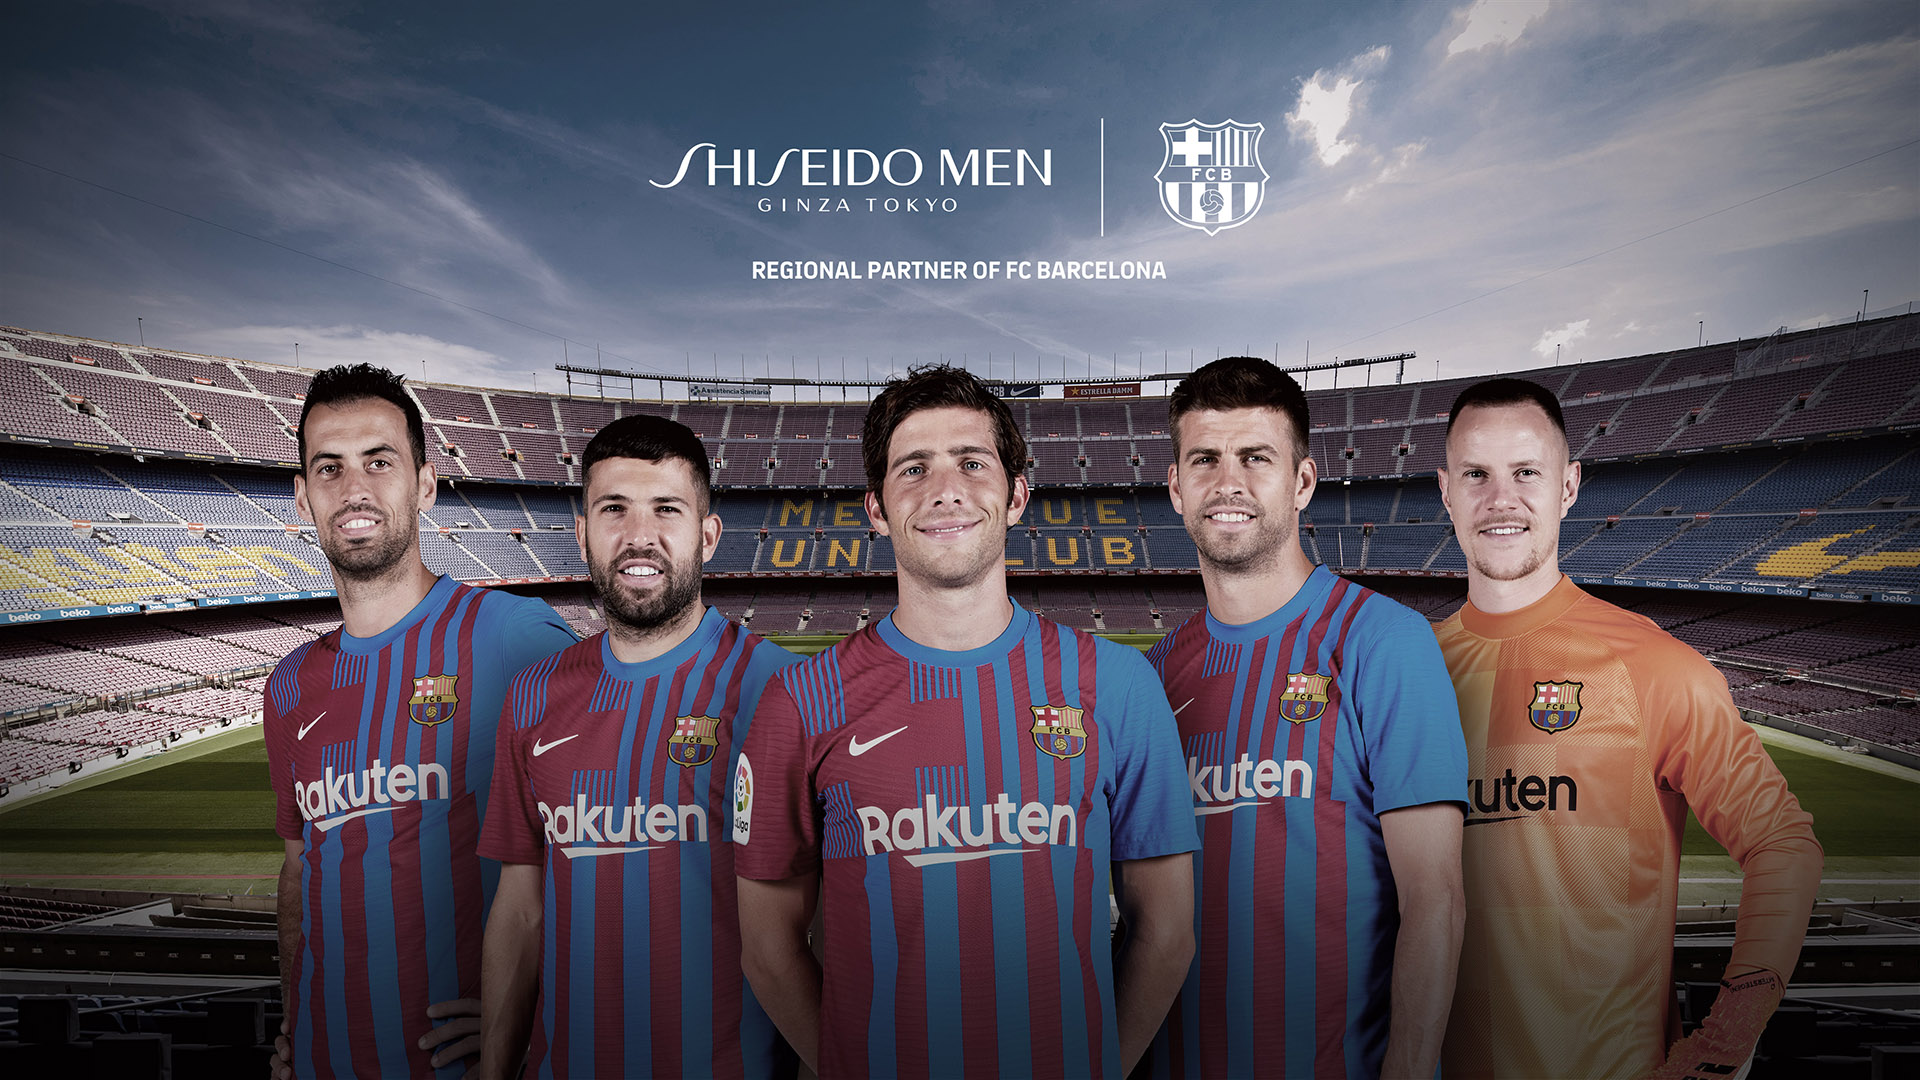 FC Barcelona and Shiseido Men unveil new campaign featuring Sergi Roberto